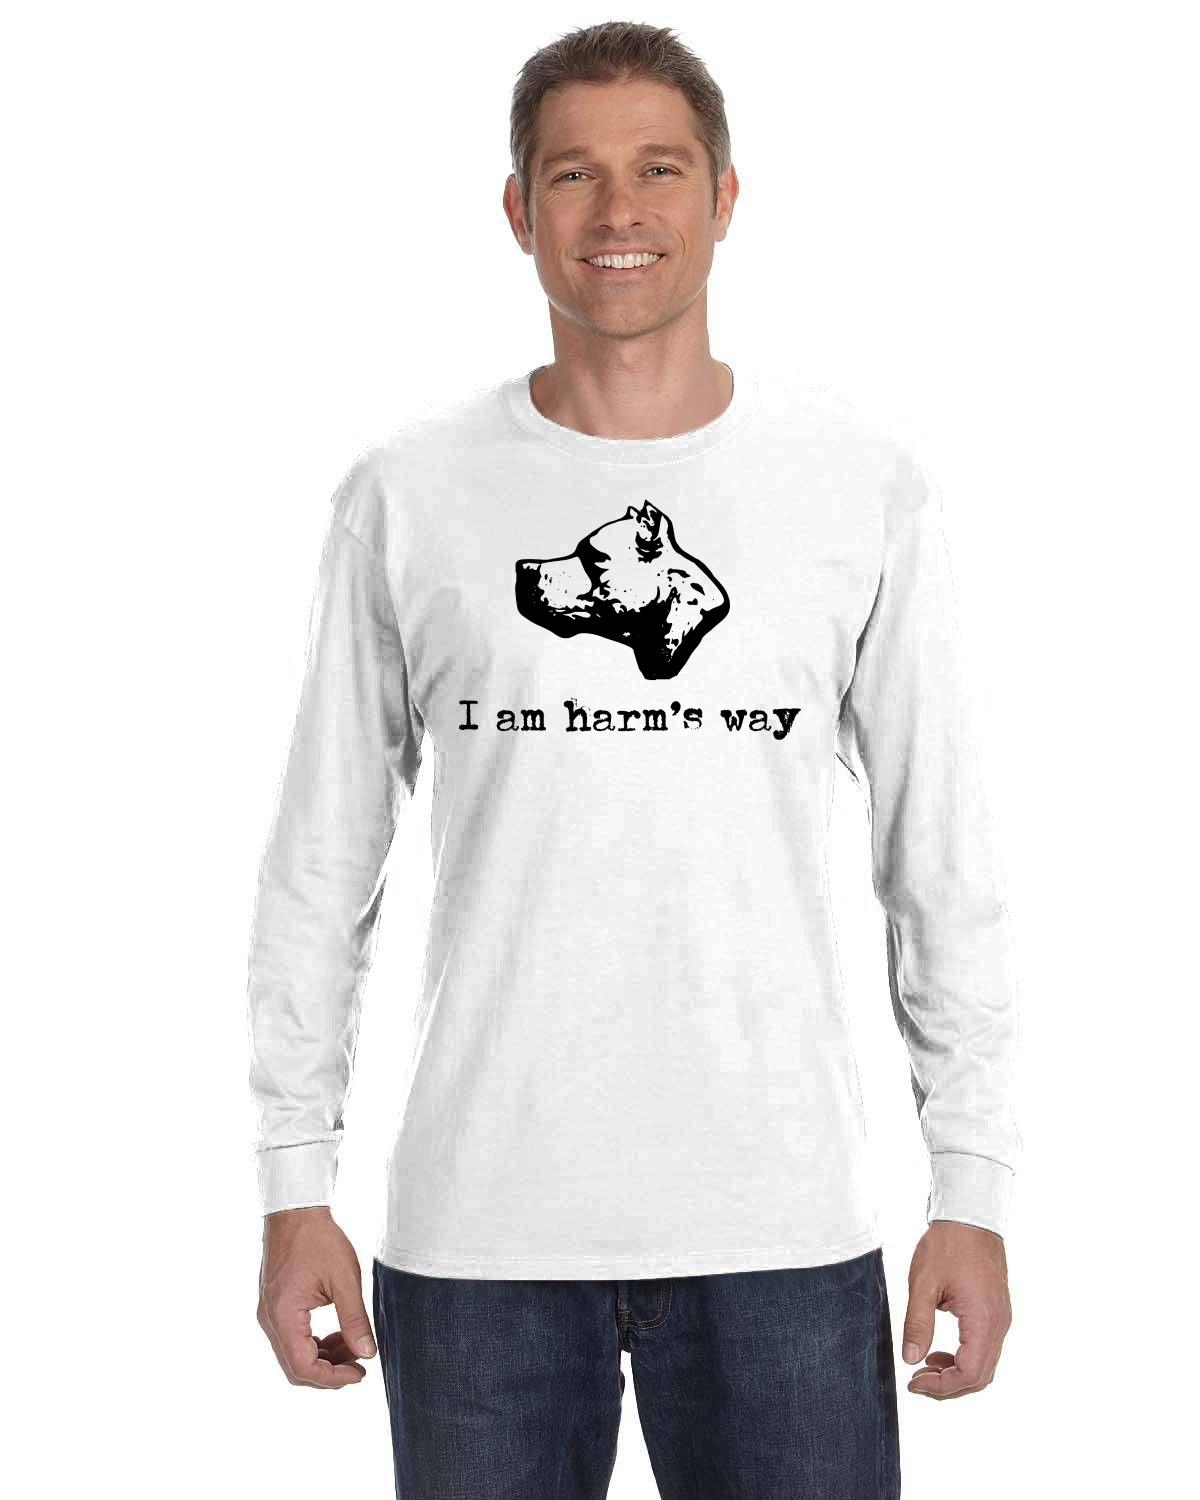 CDAC "I Am Harm's Way" White Long Sleeve Adult Shirt